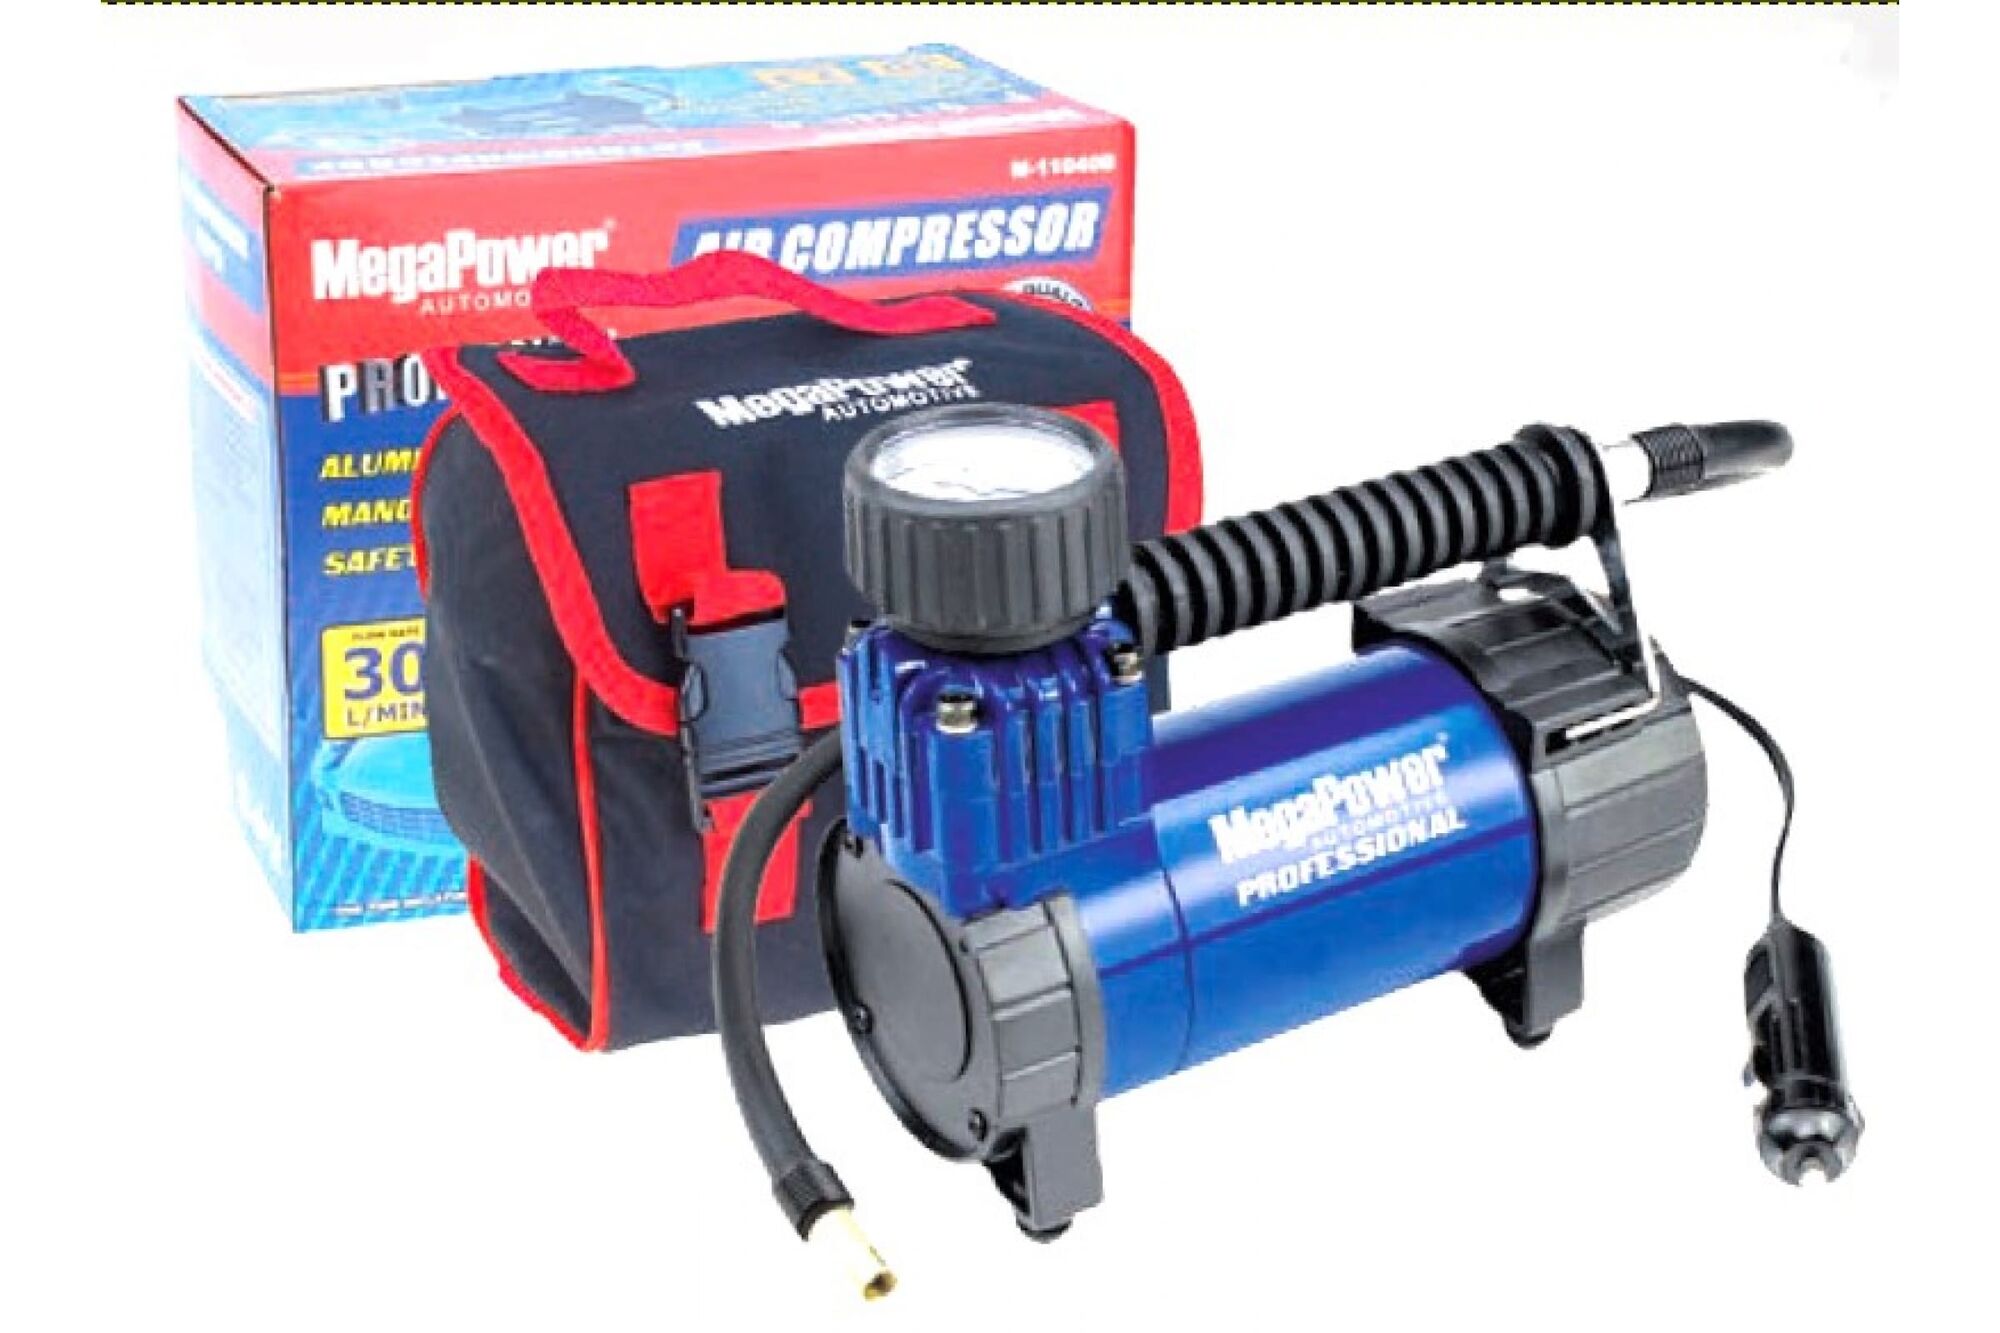 Поршневой компрессор в сумке MEGAPOWER M-11040 BLUE 100PSI 30 л мин, 12А, 12 V 1 10 03.11.040B MegaPower